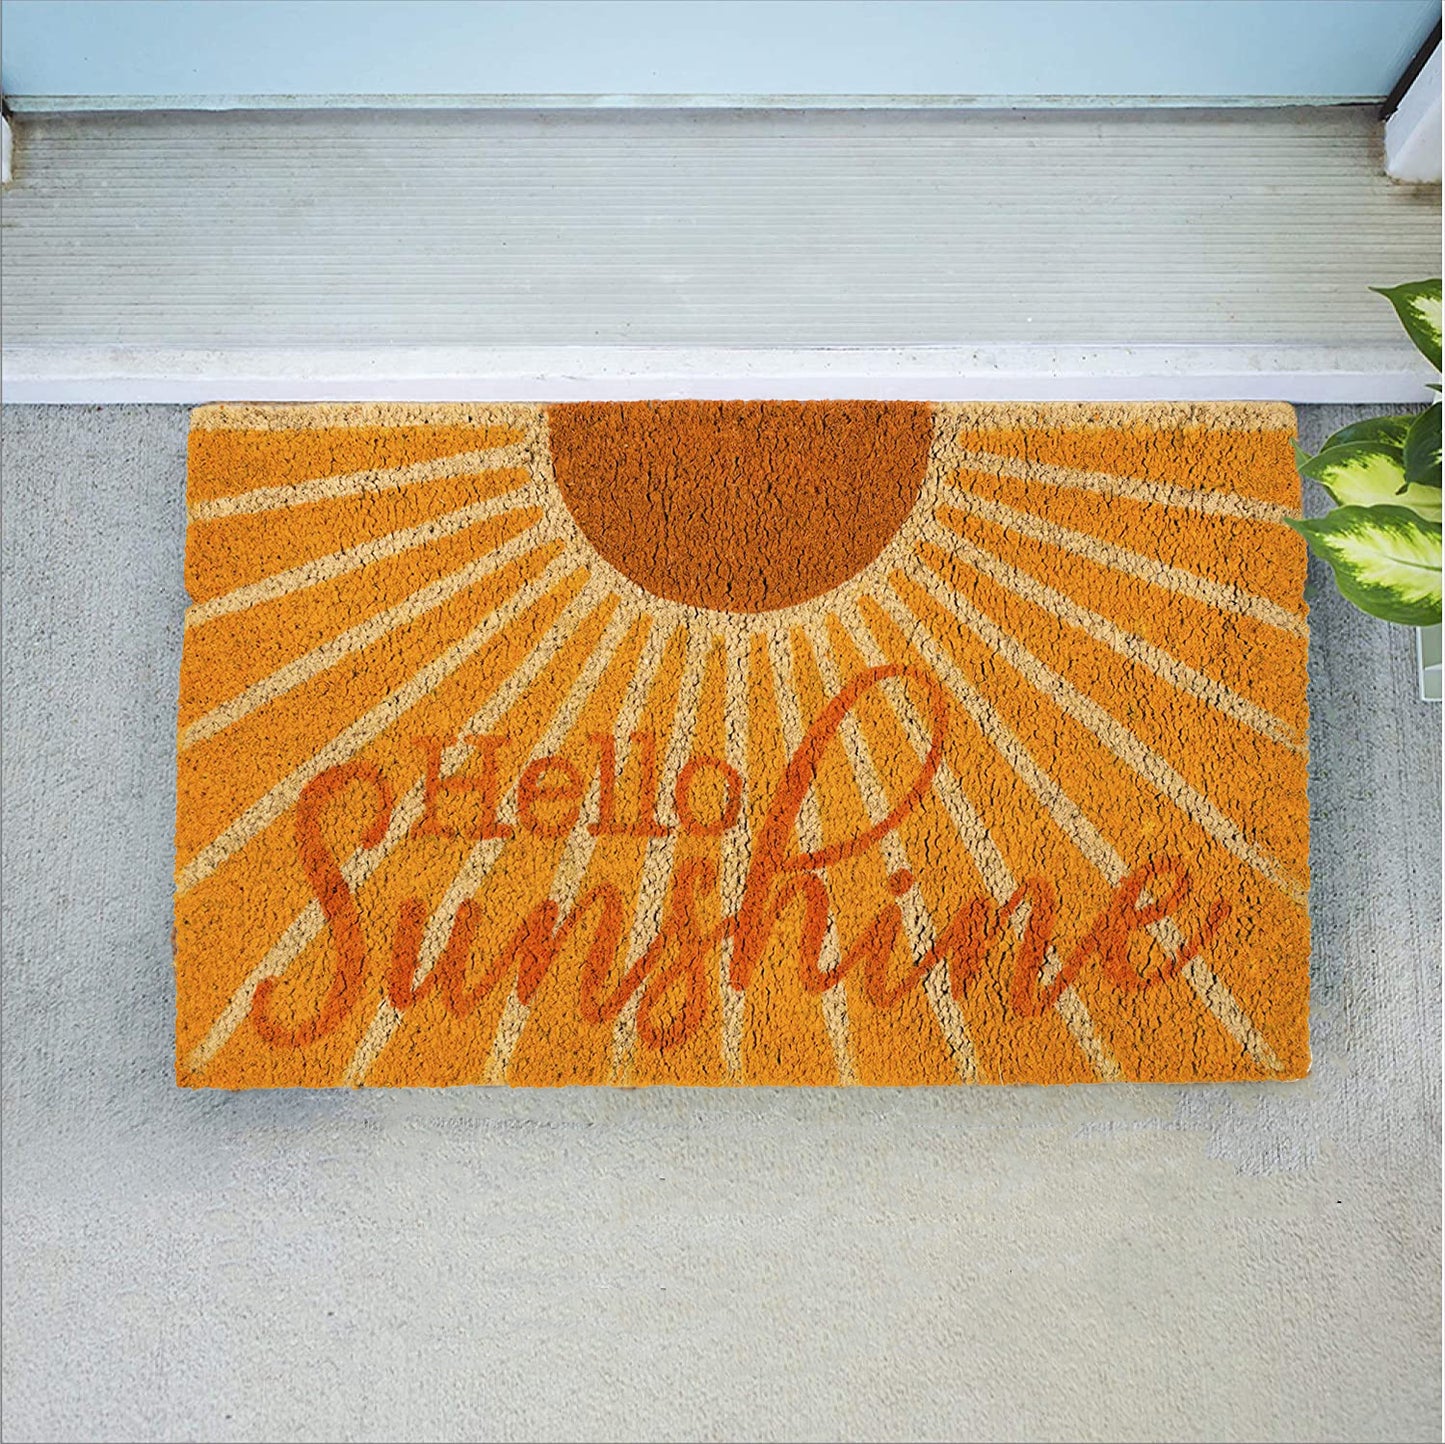 Avera Products "Hello Sunshine" Summer Time Fun Doormat